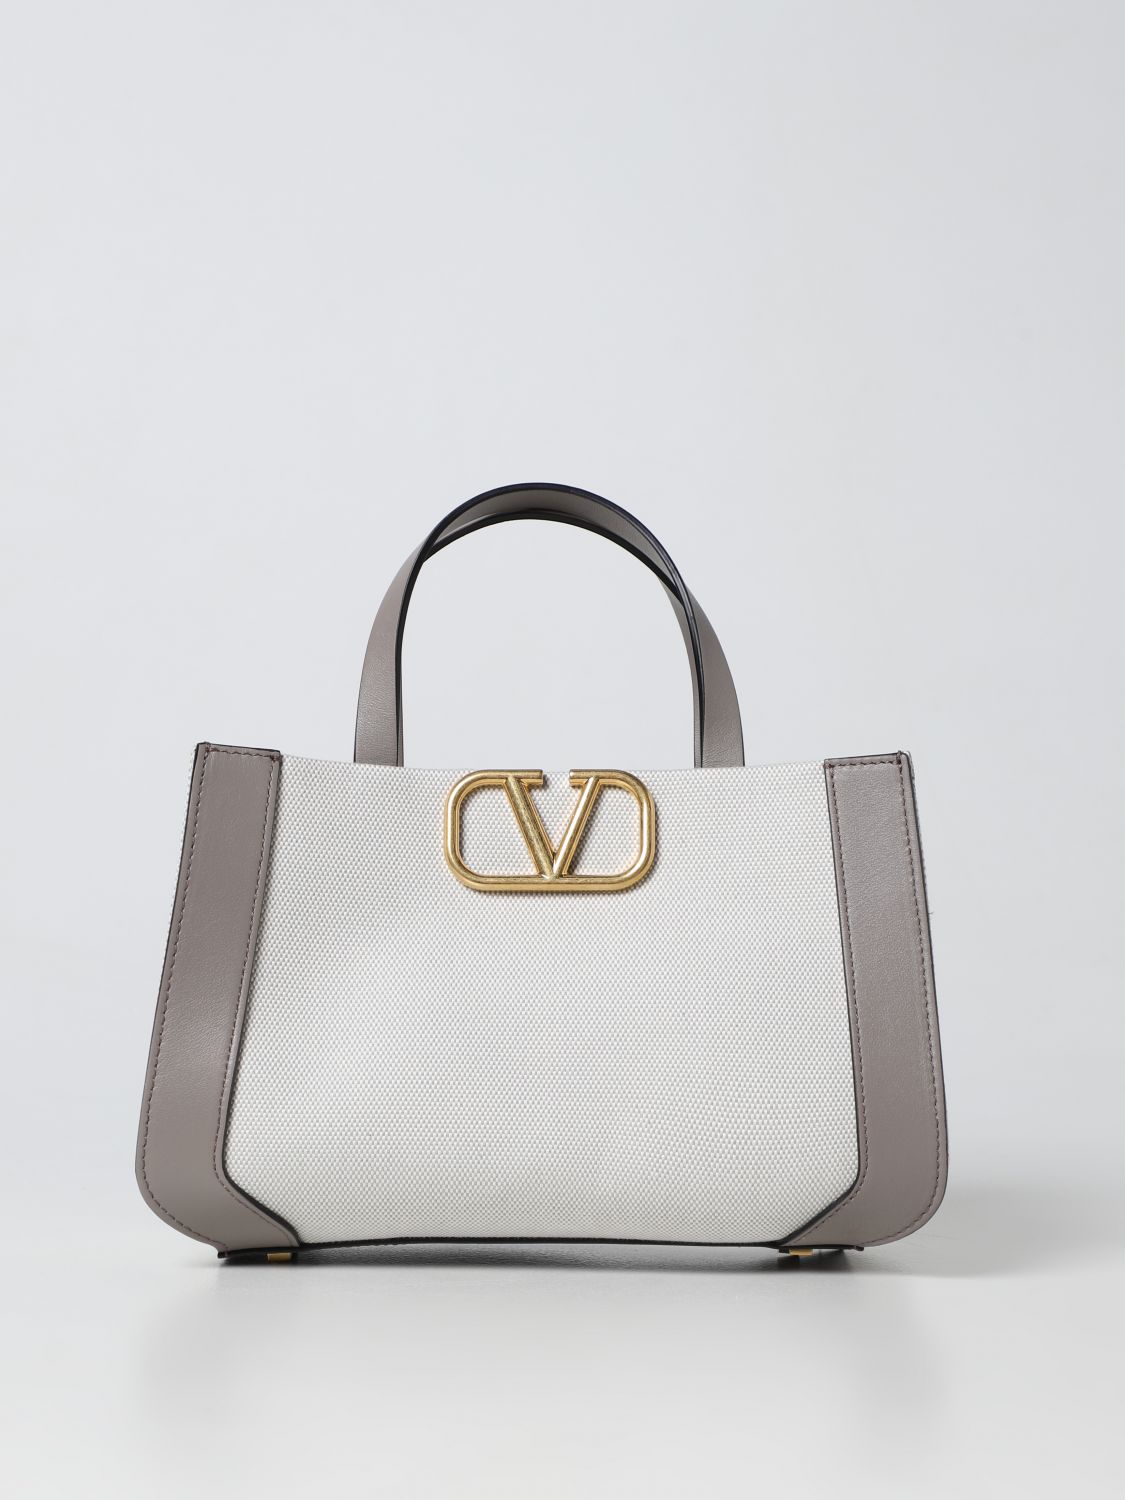 VALENTINO GARAVANI: VLogo Valentino bag in cotton and leather - Grey | Valentino Garavani handbag online on GIGLIO.COM